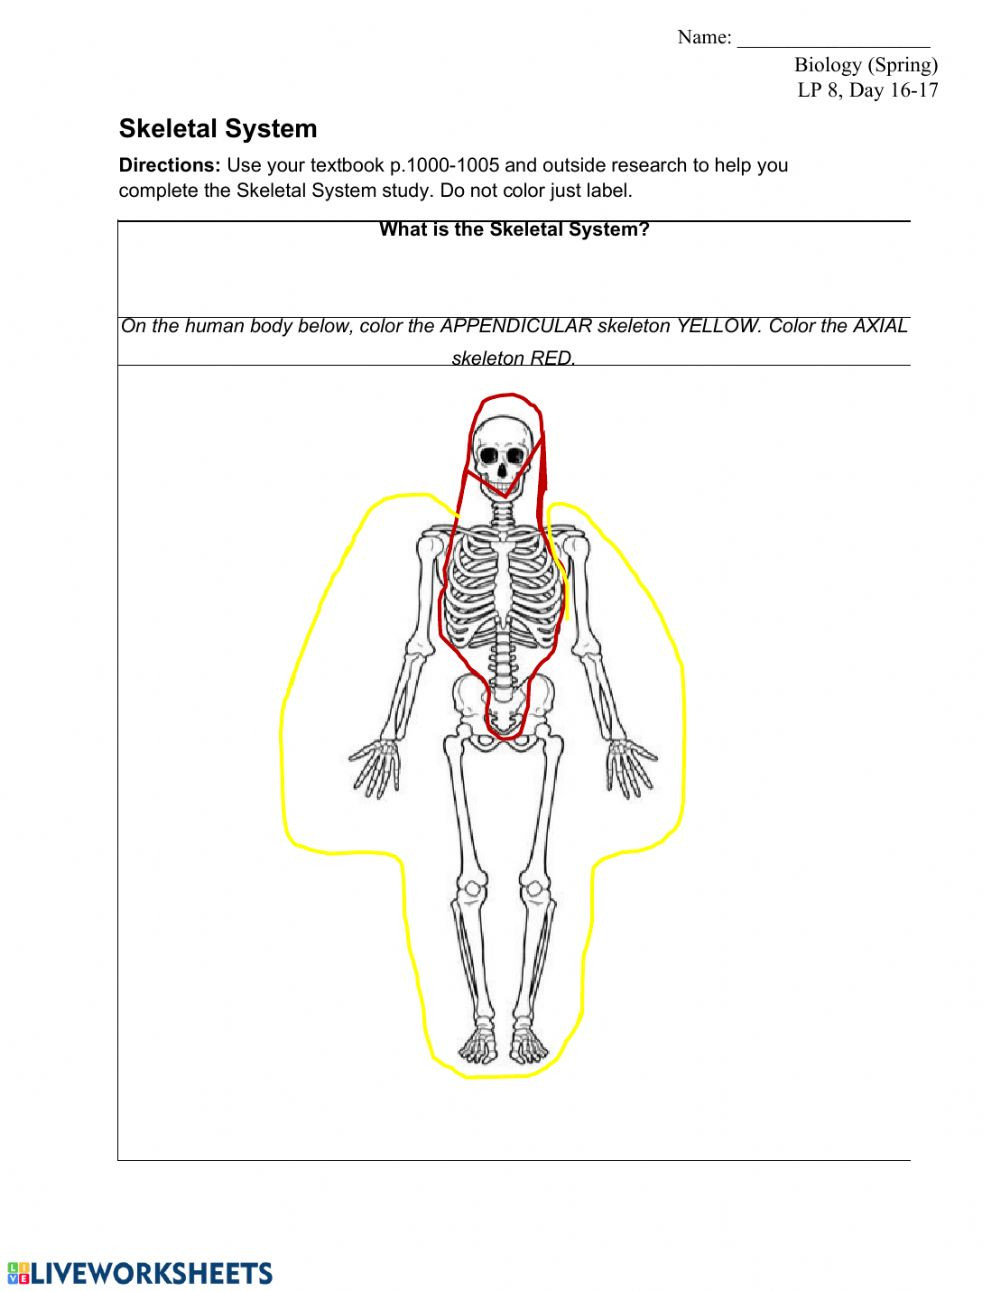 Appendicular Skeleton Worksheet Answers Biology Lp 8 D 16 17 Interactive Worksheet